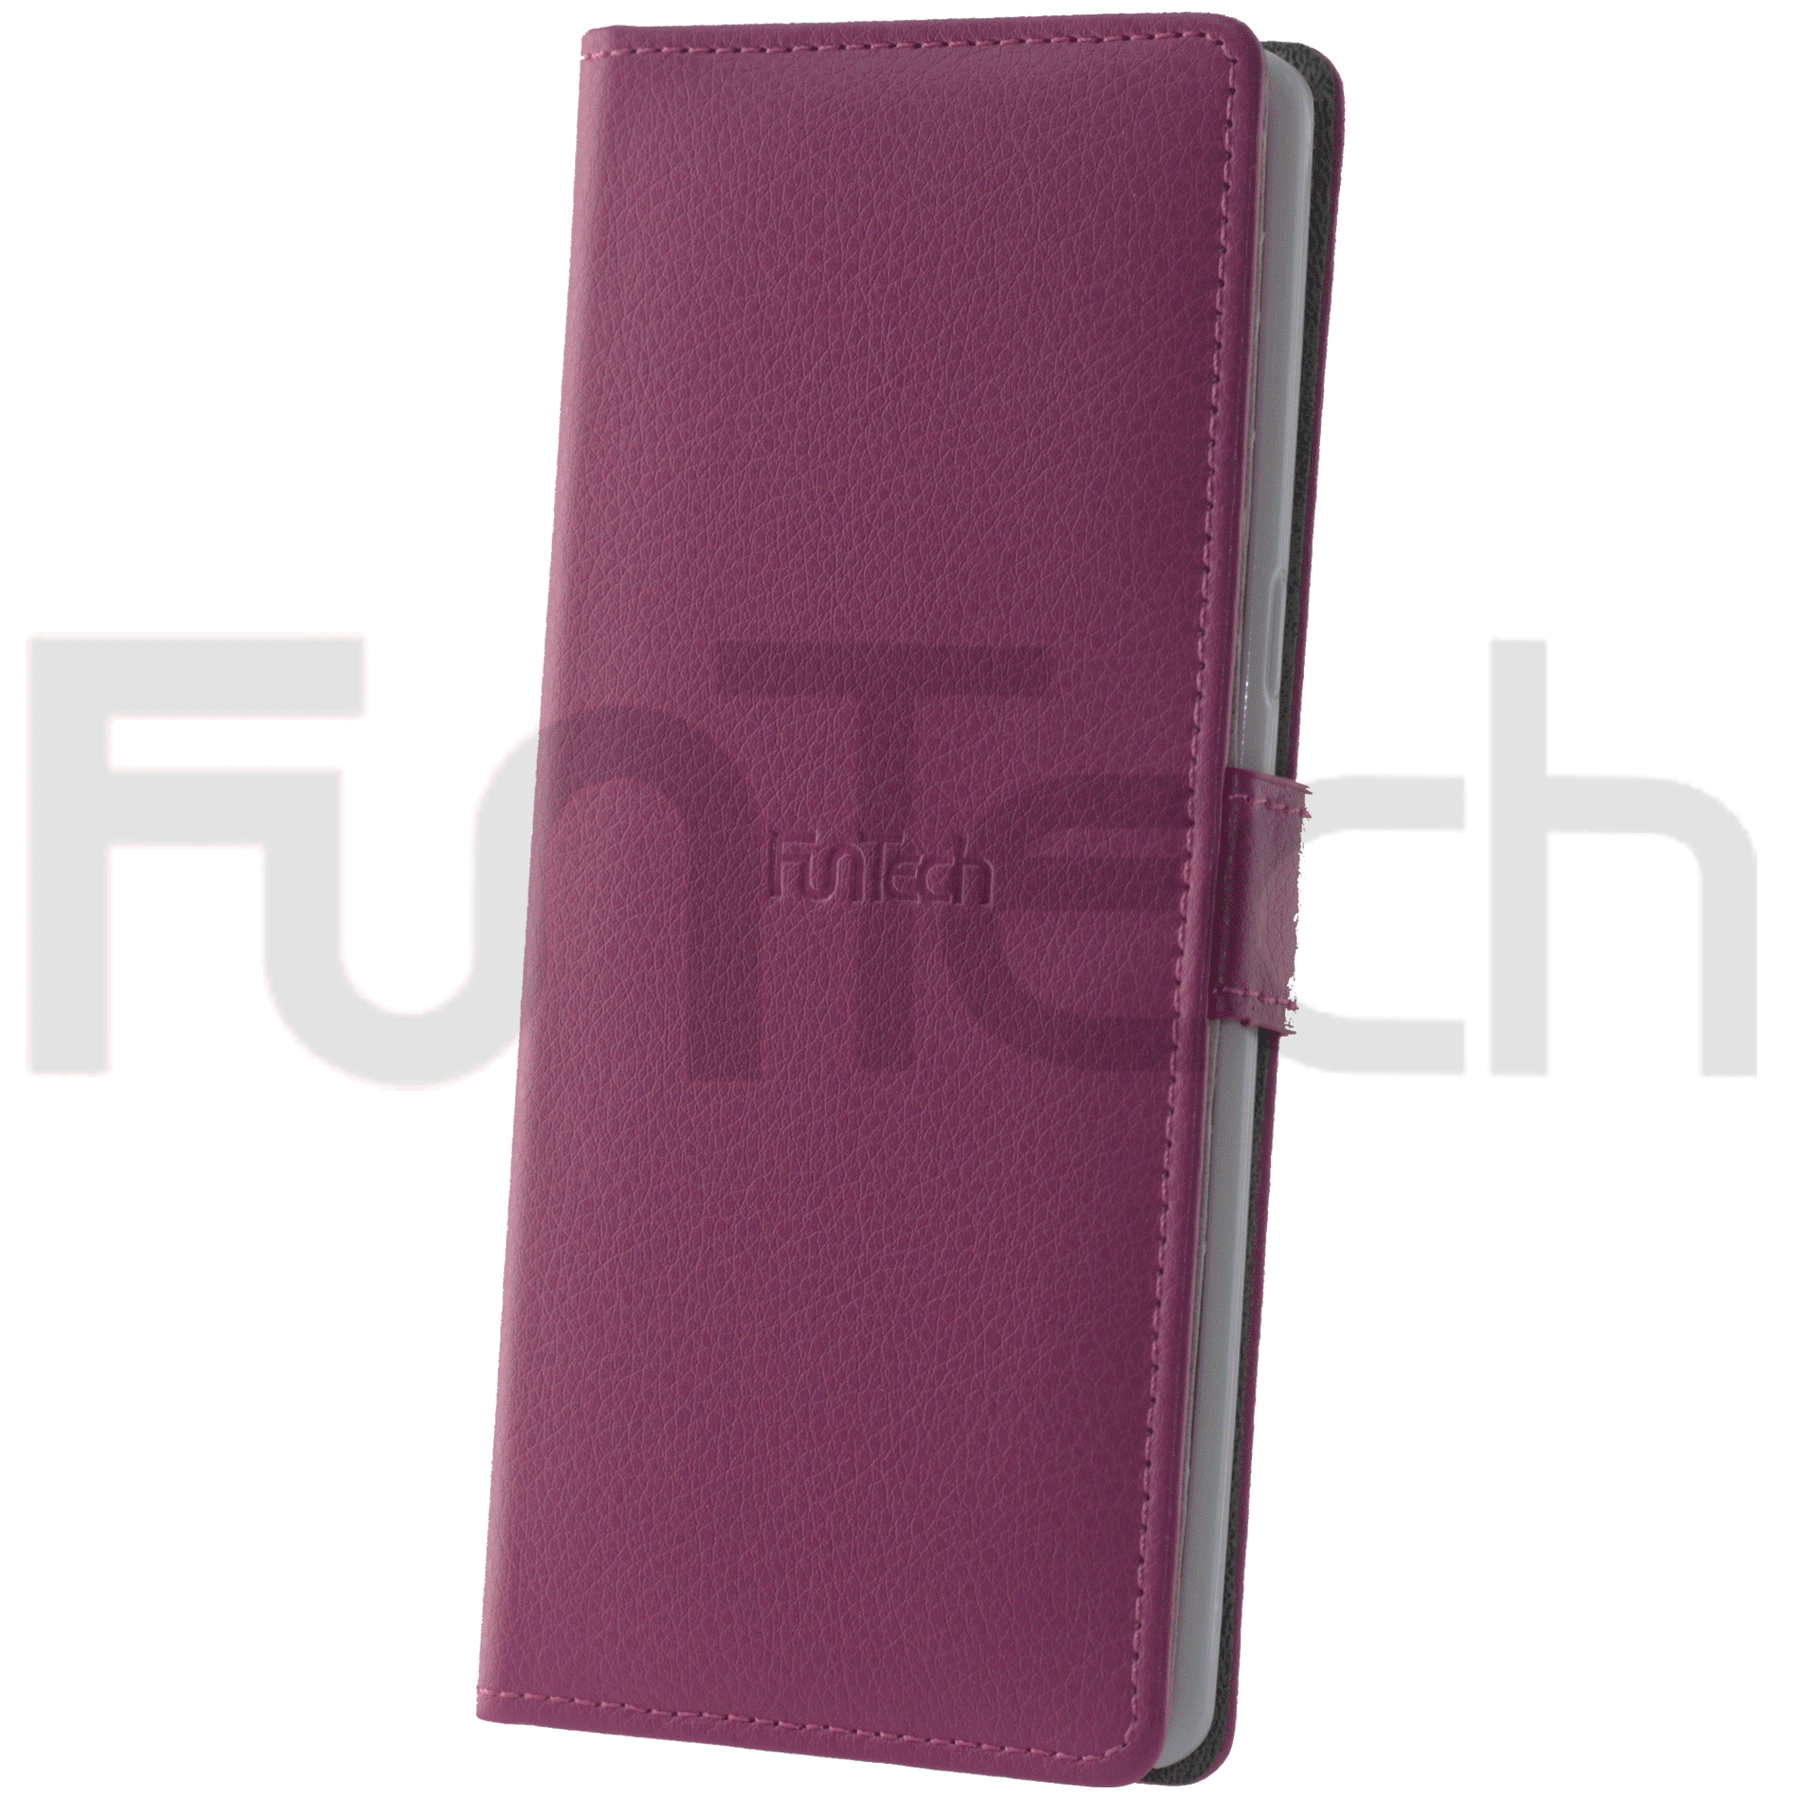 Samsung Note 8, Leather Wallet Case, Color Pink.